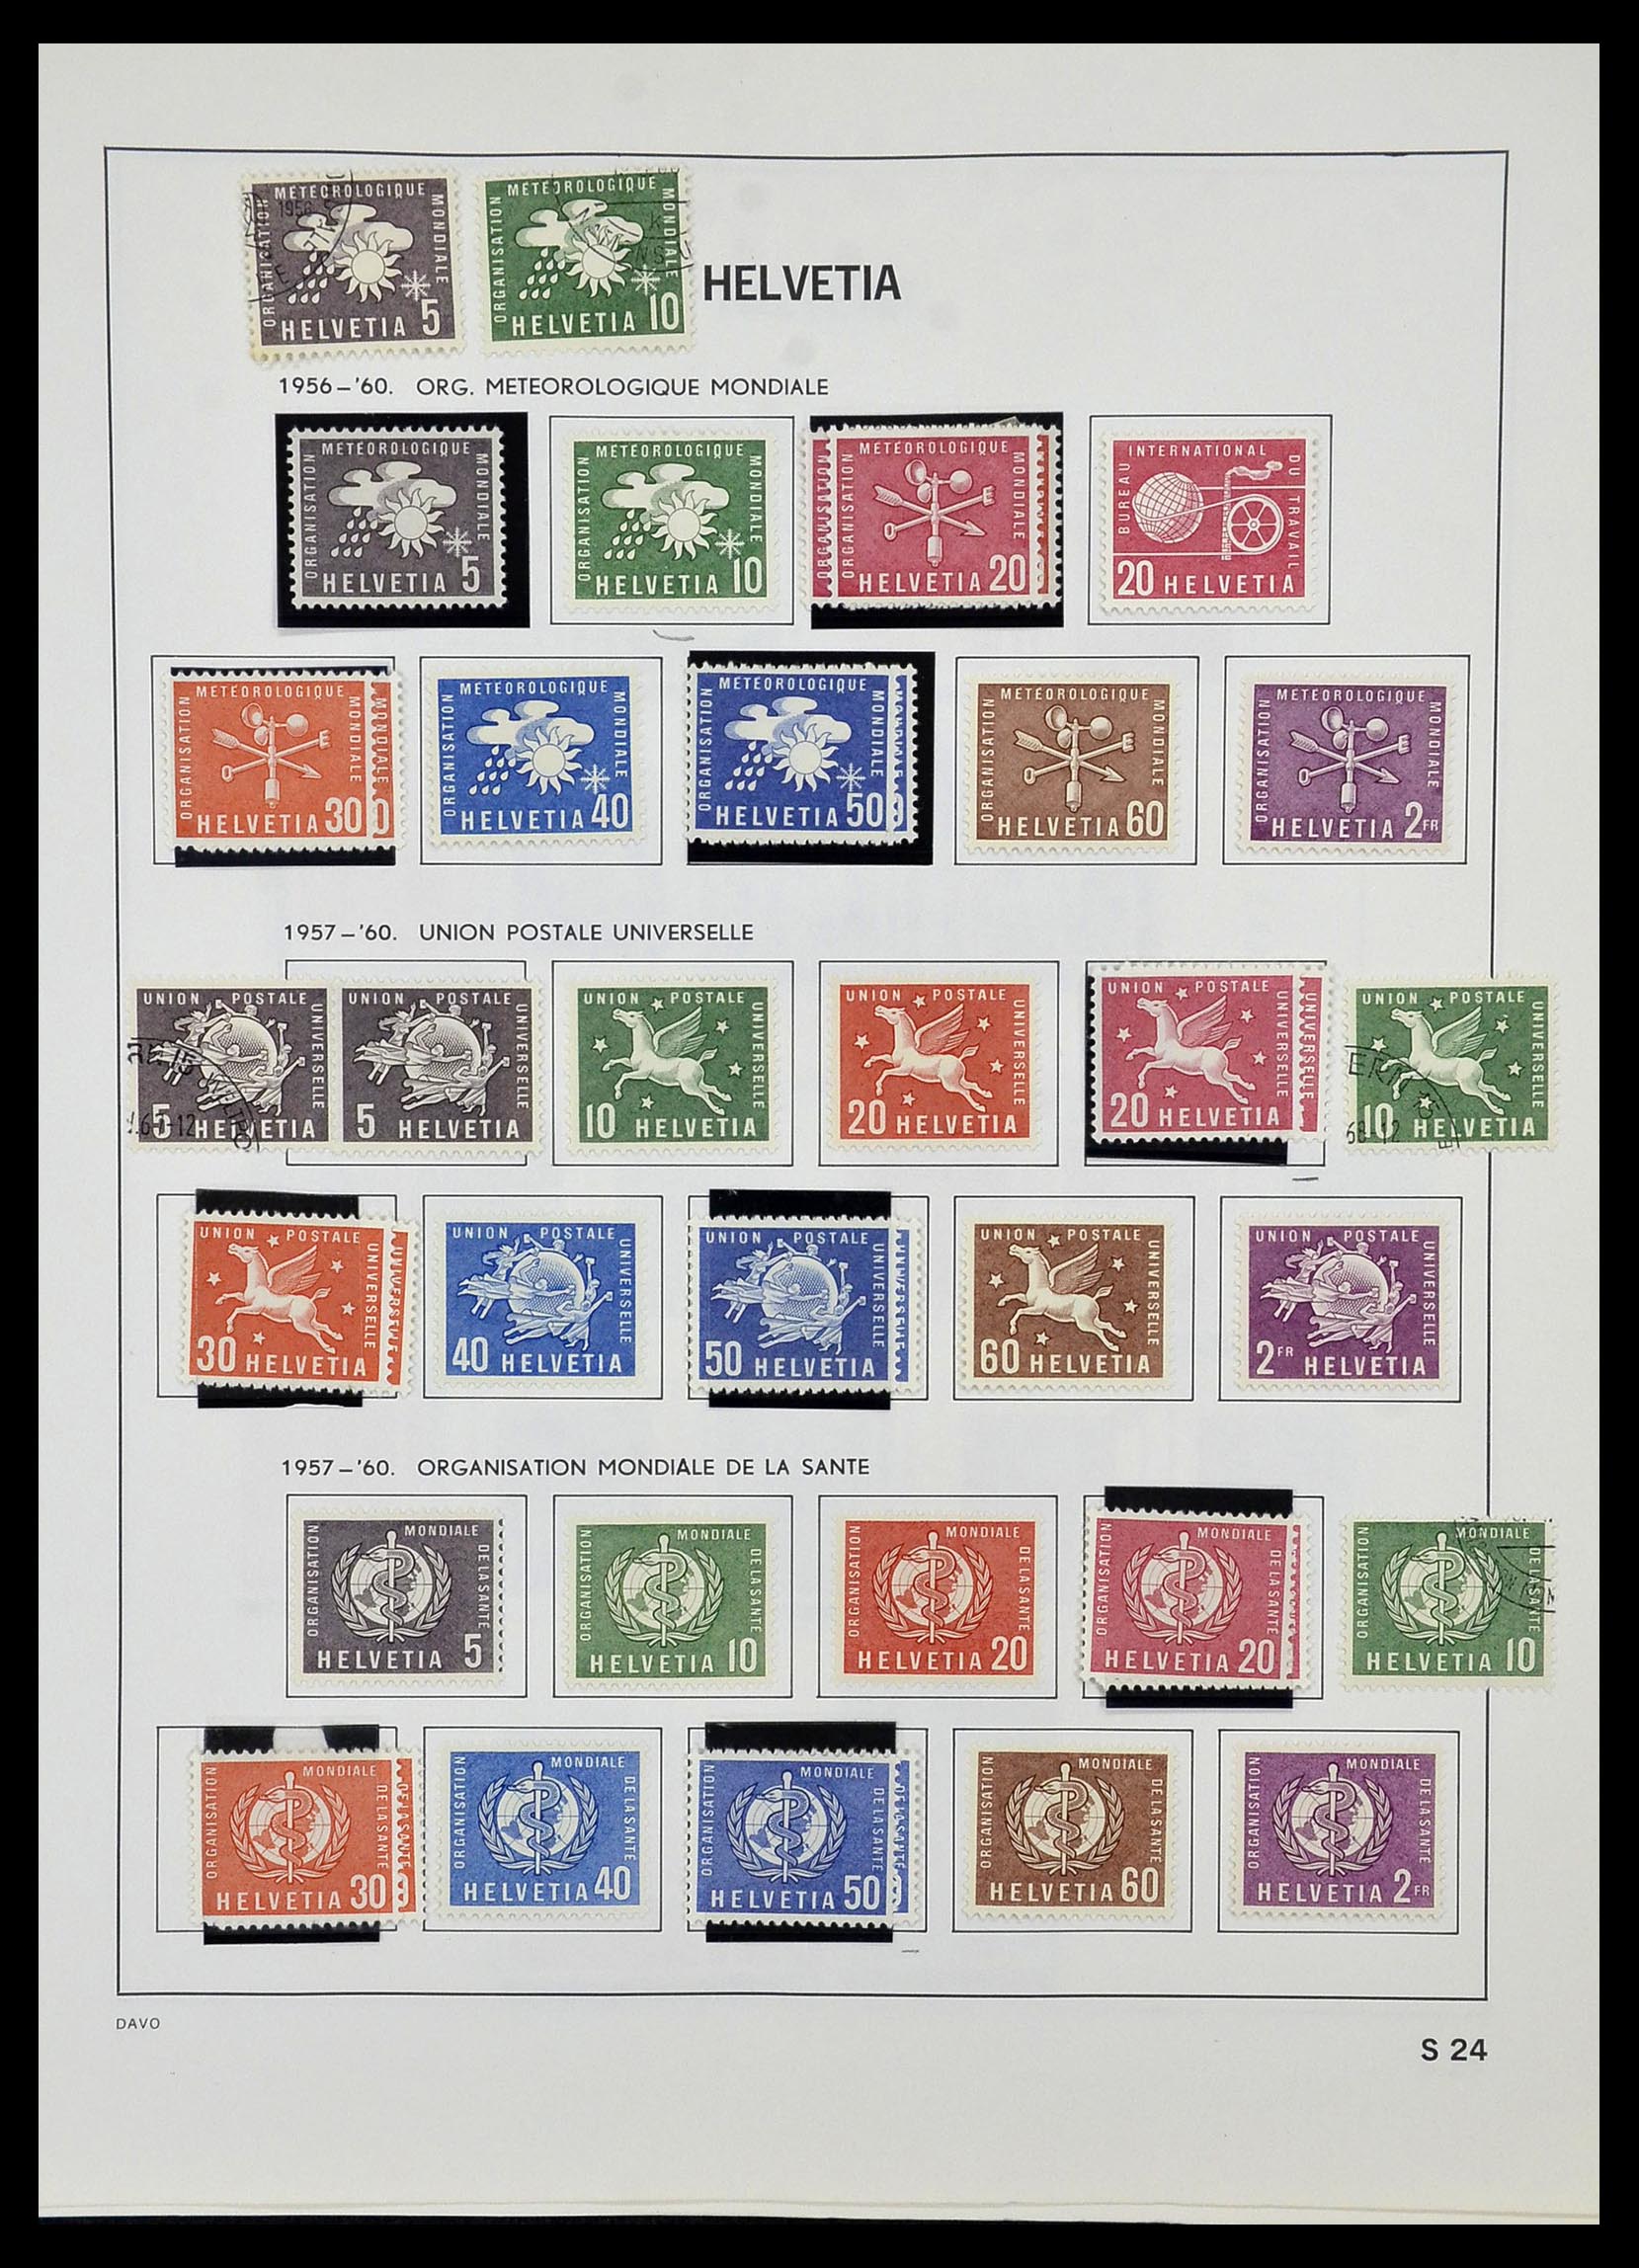 33990 163 - Stamp collection 33990 Switzerland 1854-1998.